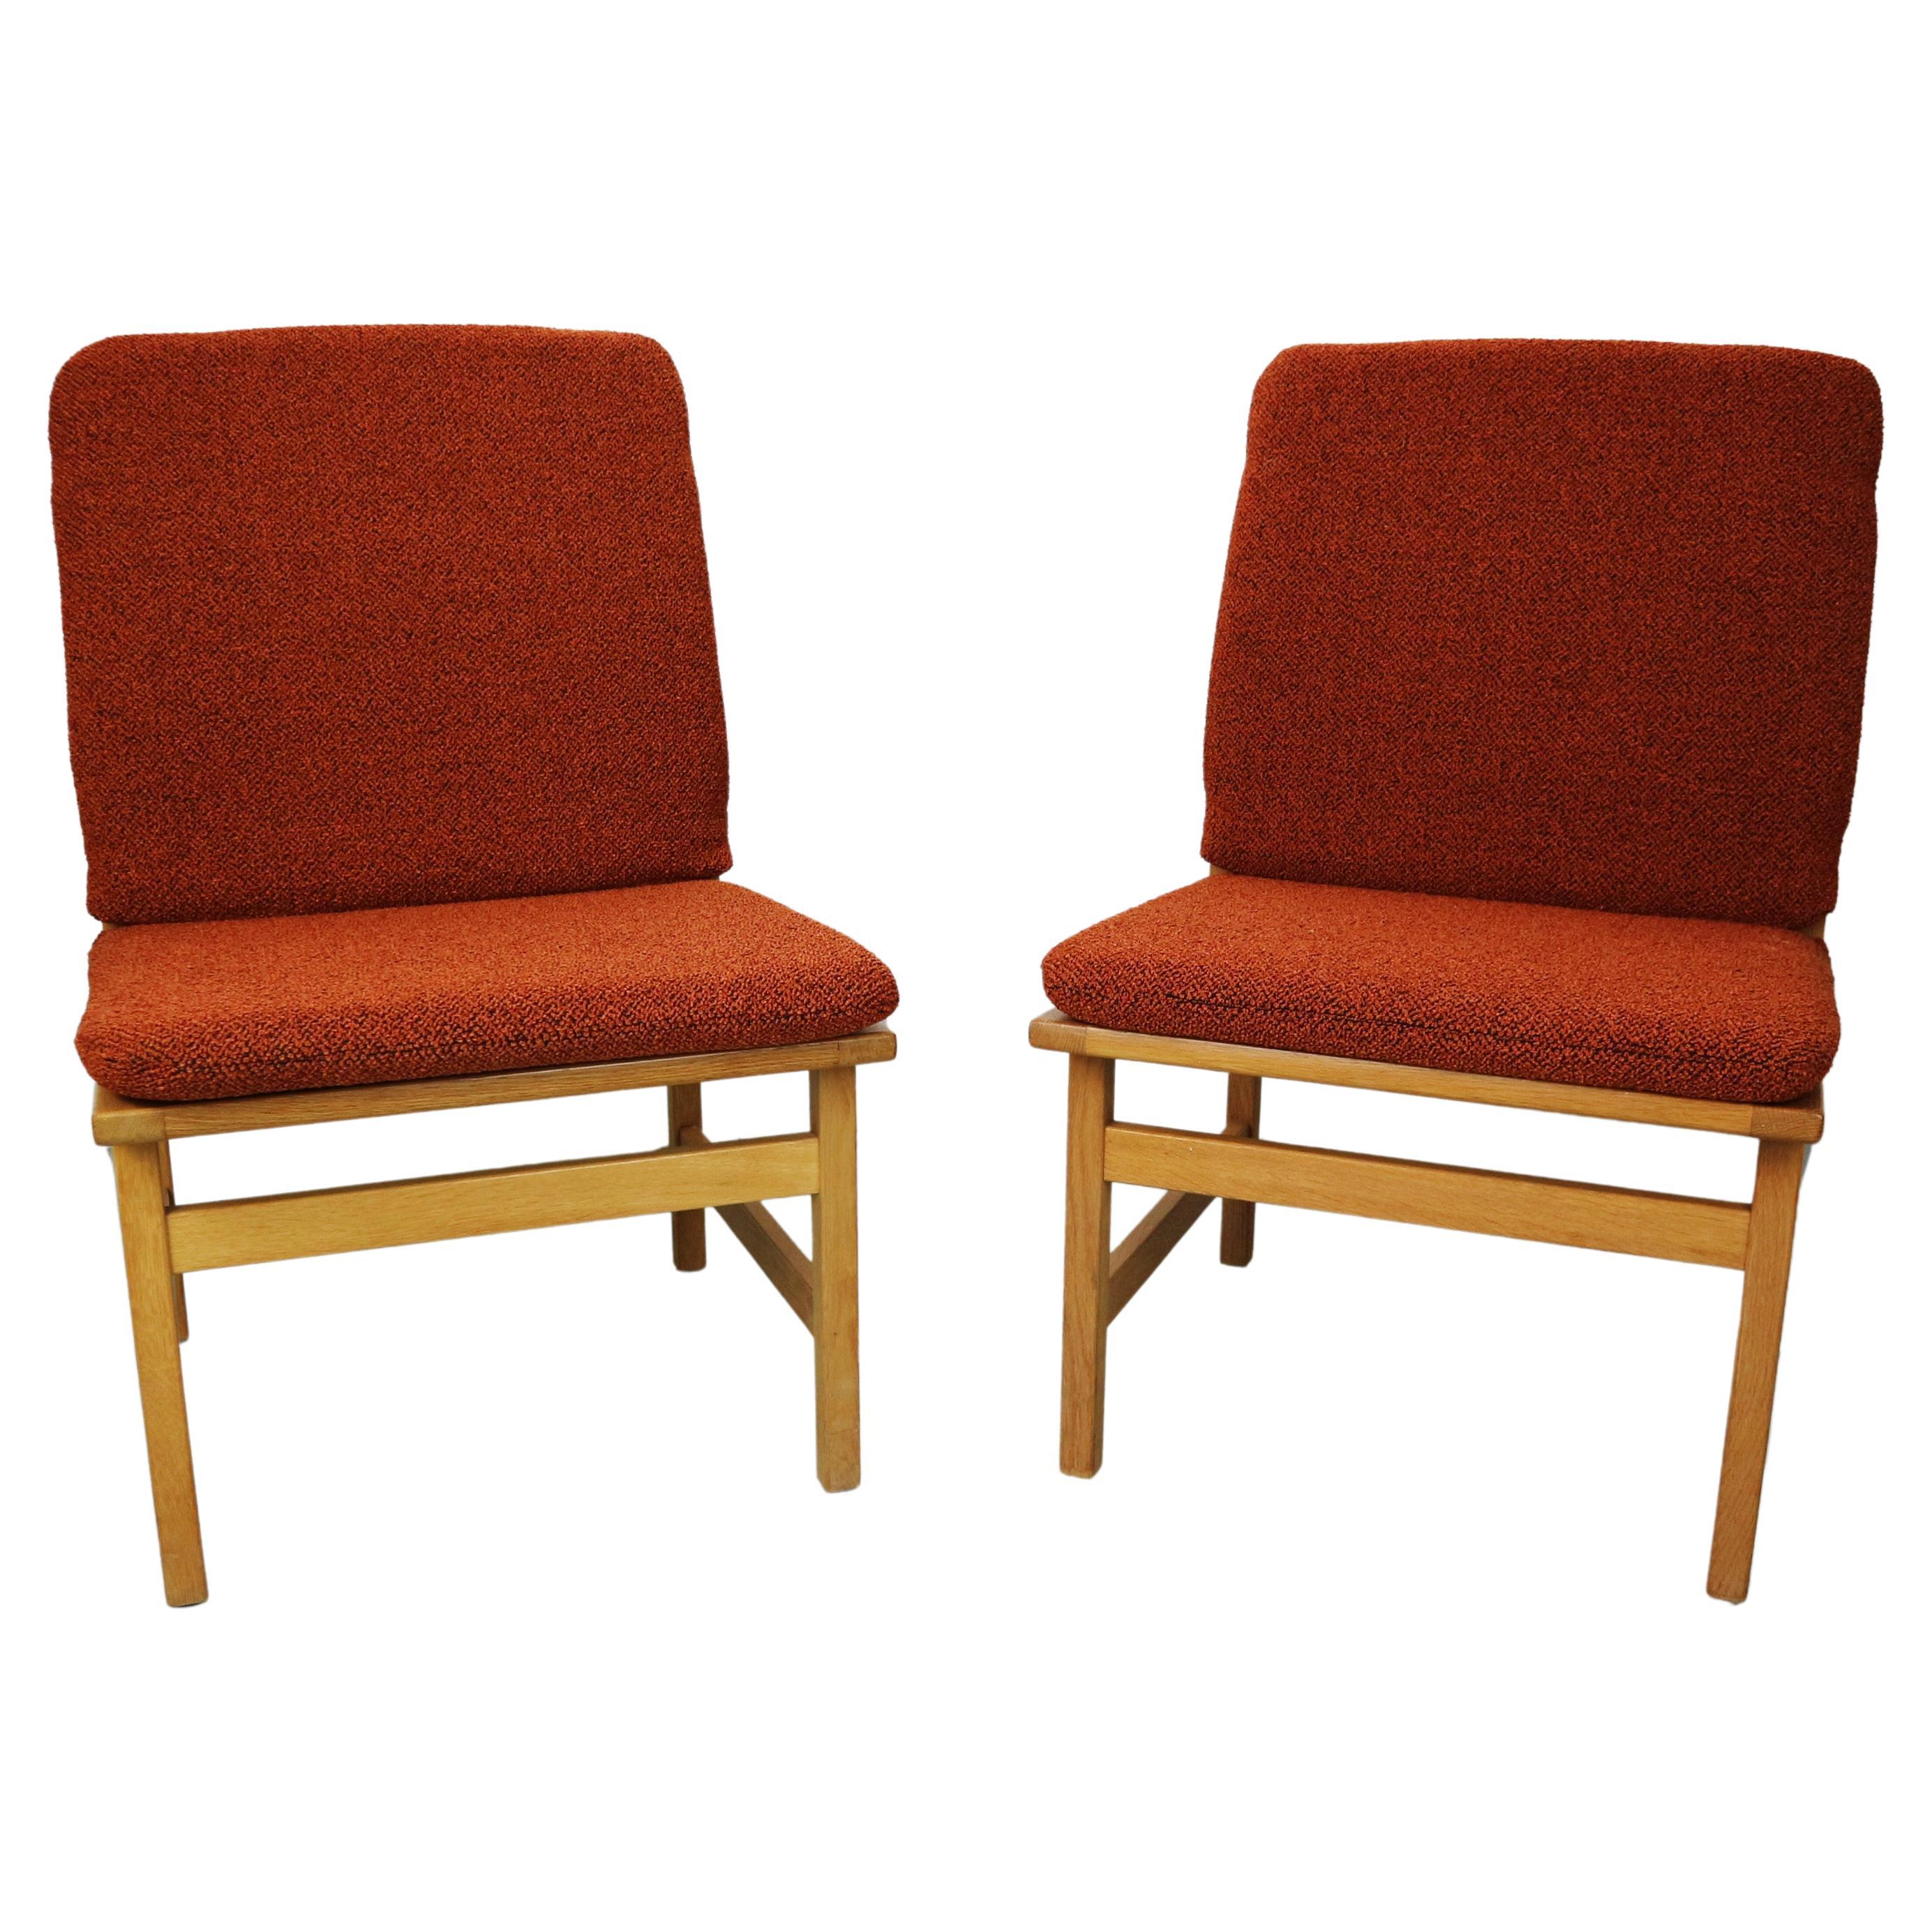 Borge Mogenson set of side chairs, model 3232  